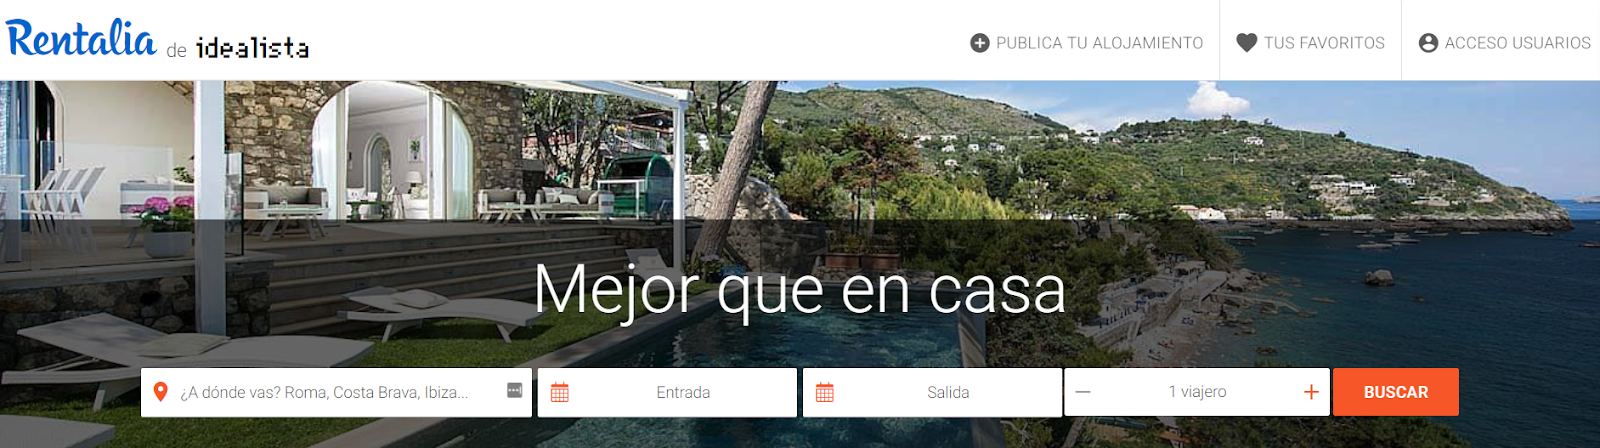 alternativas a Airbnb en España Rentalia